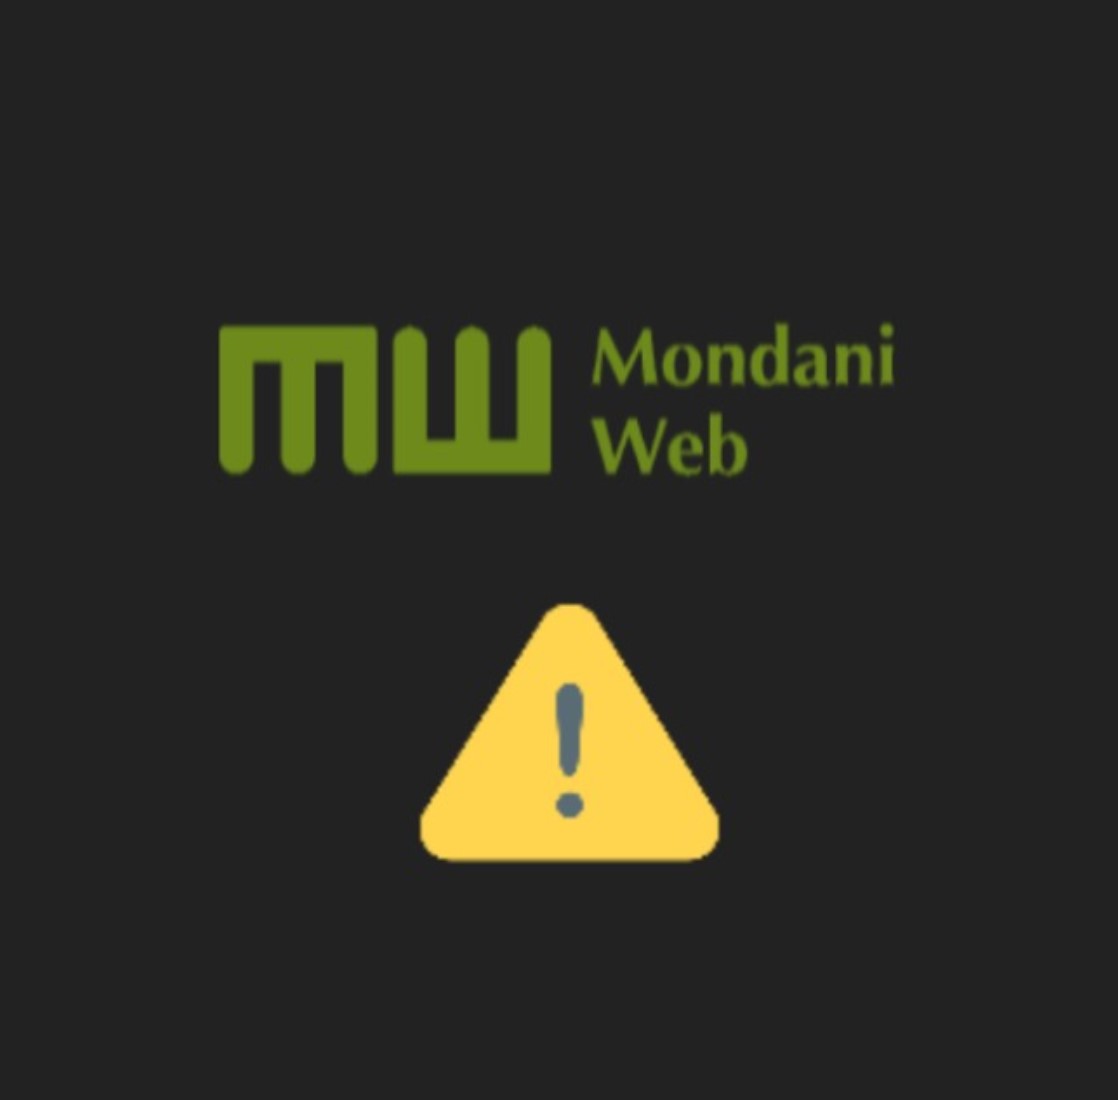 IMPORTANT NOTICE FOR MONDANI WEB TRUSTED DEALERS - MondaniWeb